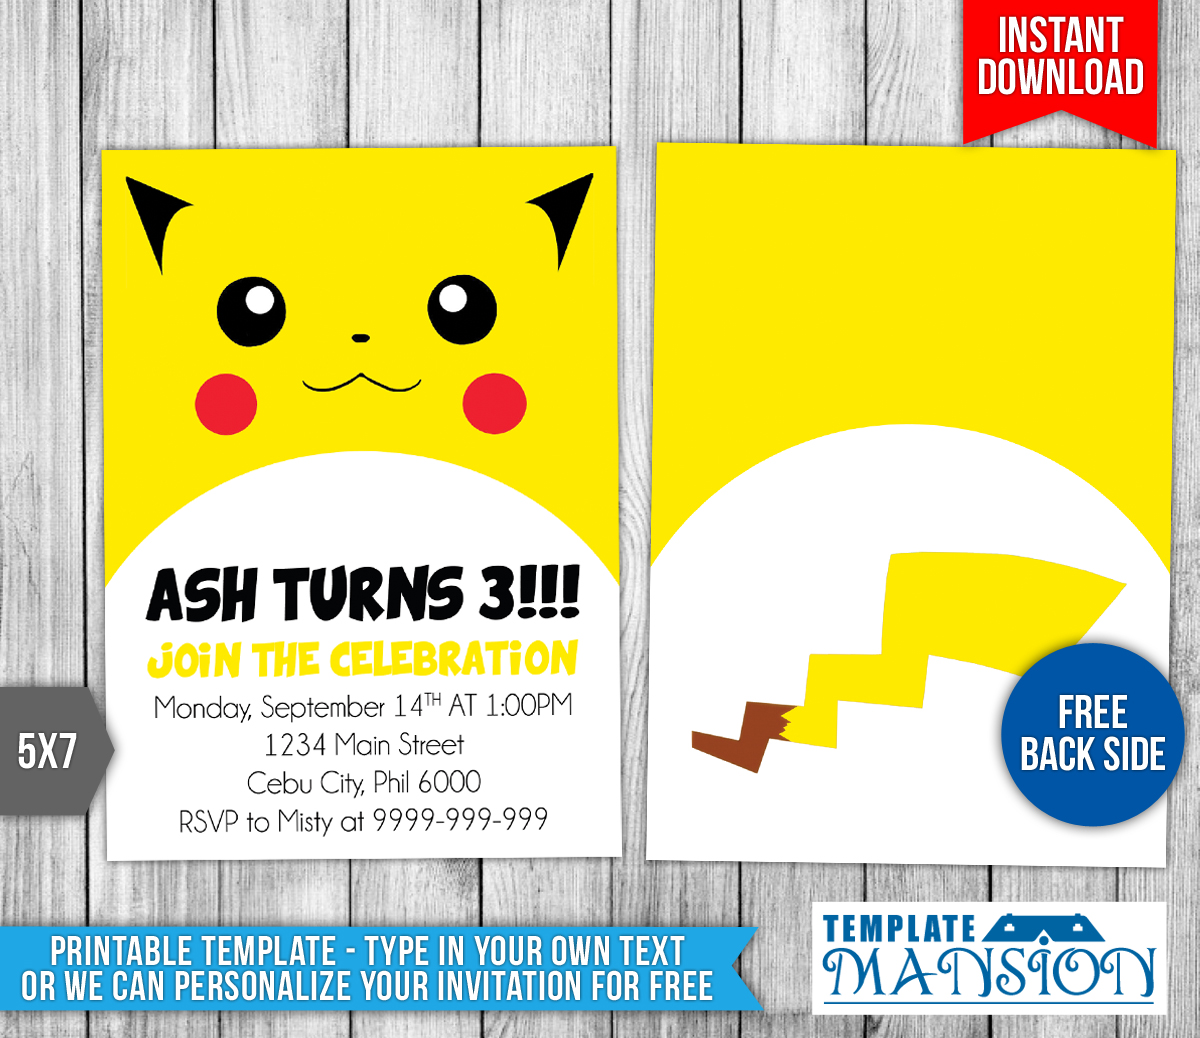 pikachu-pokemon-birthday-invitation-template-by-templatemansion-on